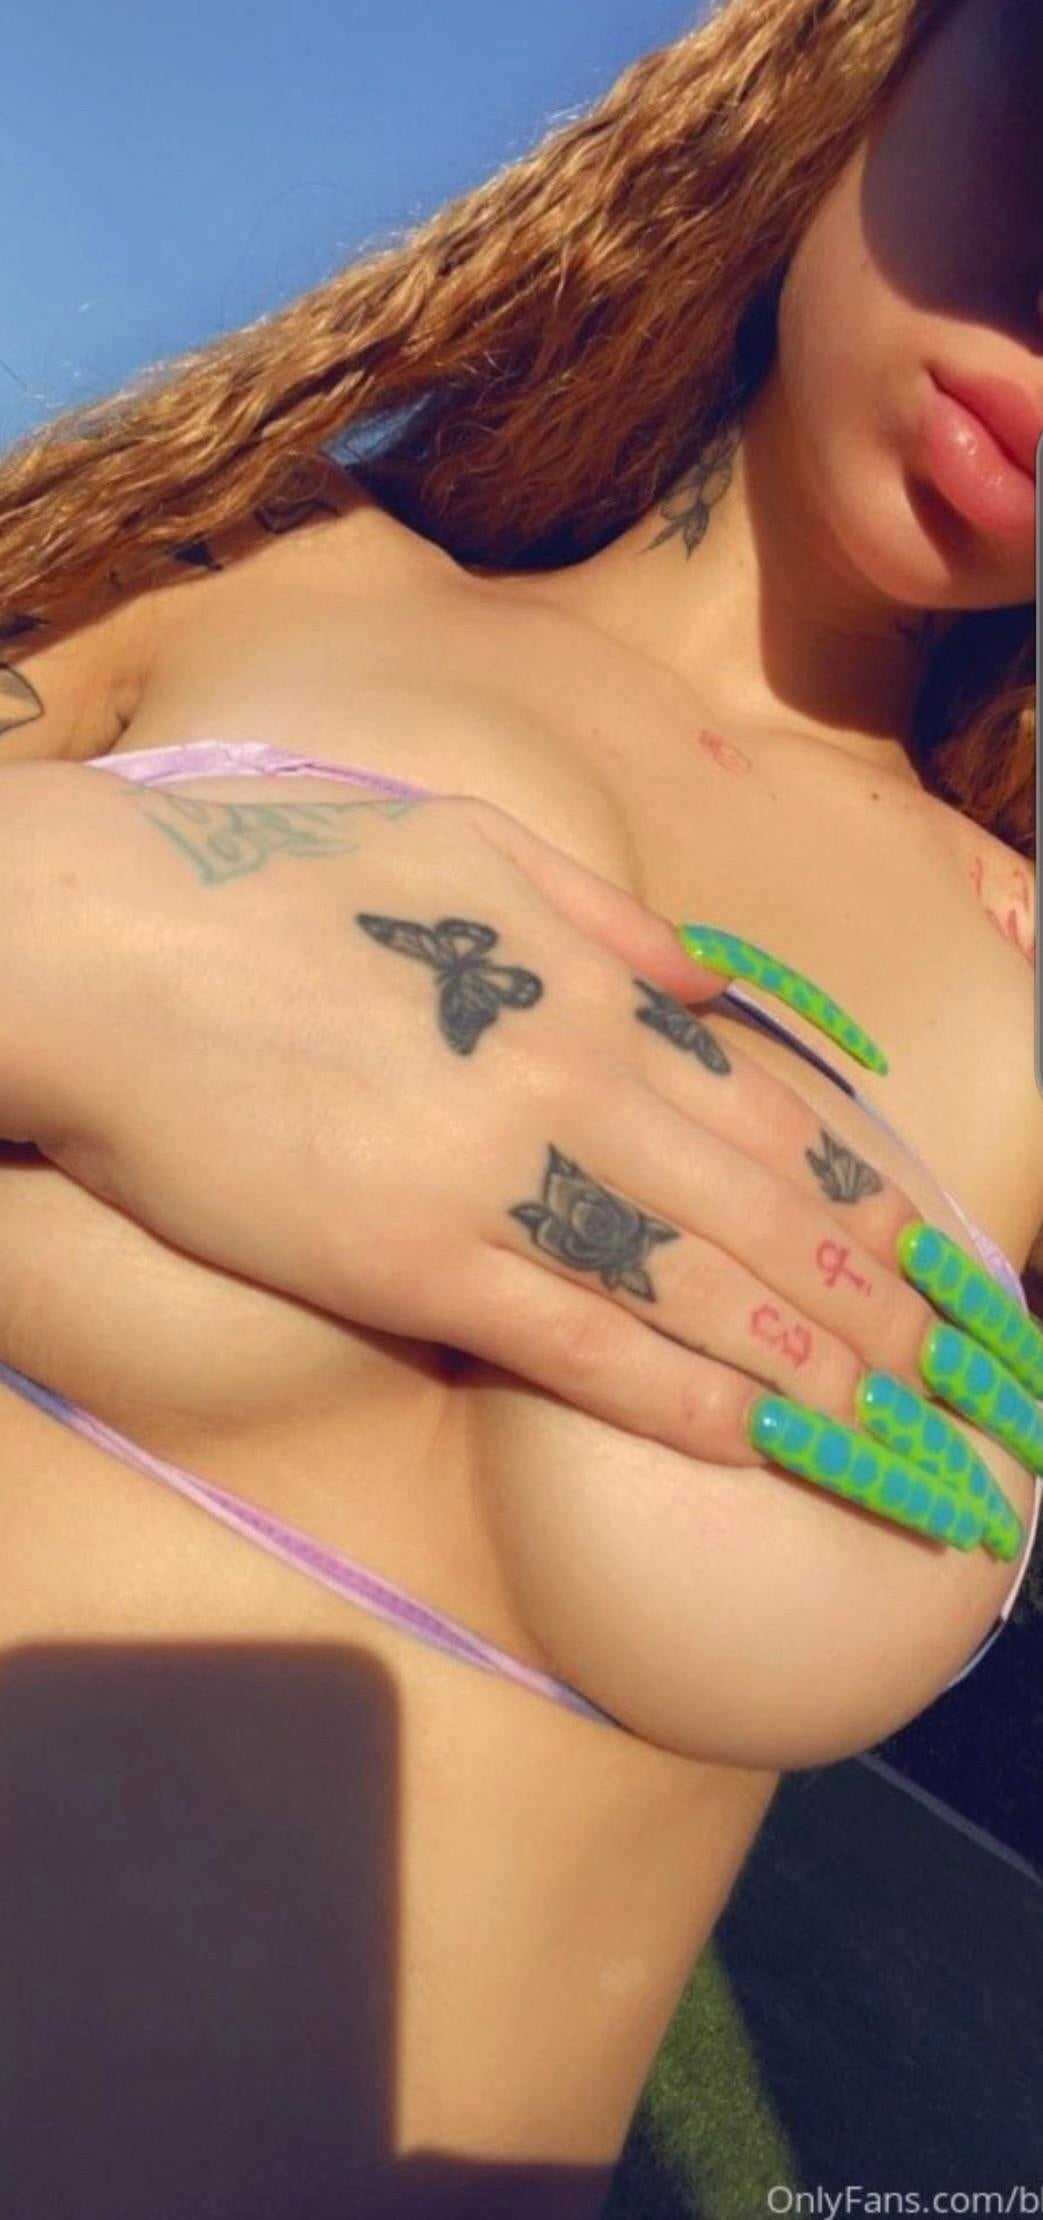 Danielle bregoli naked pics